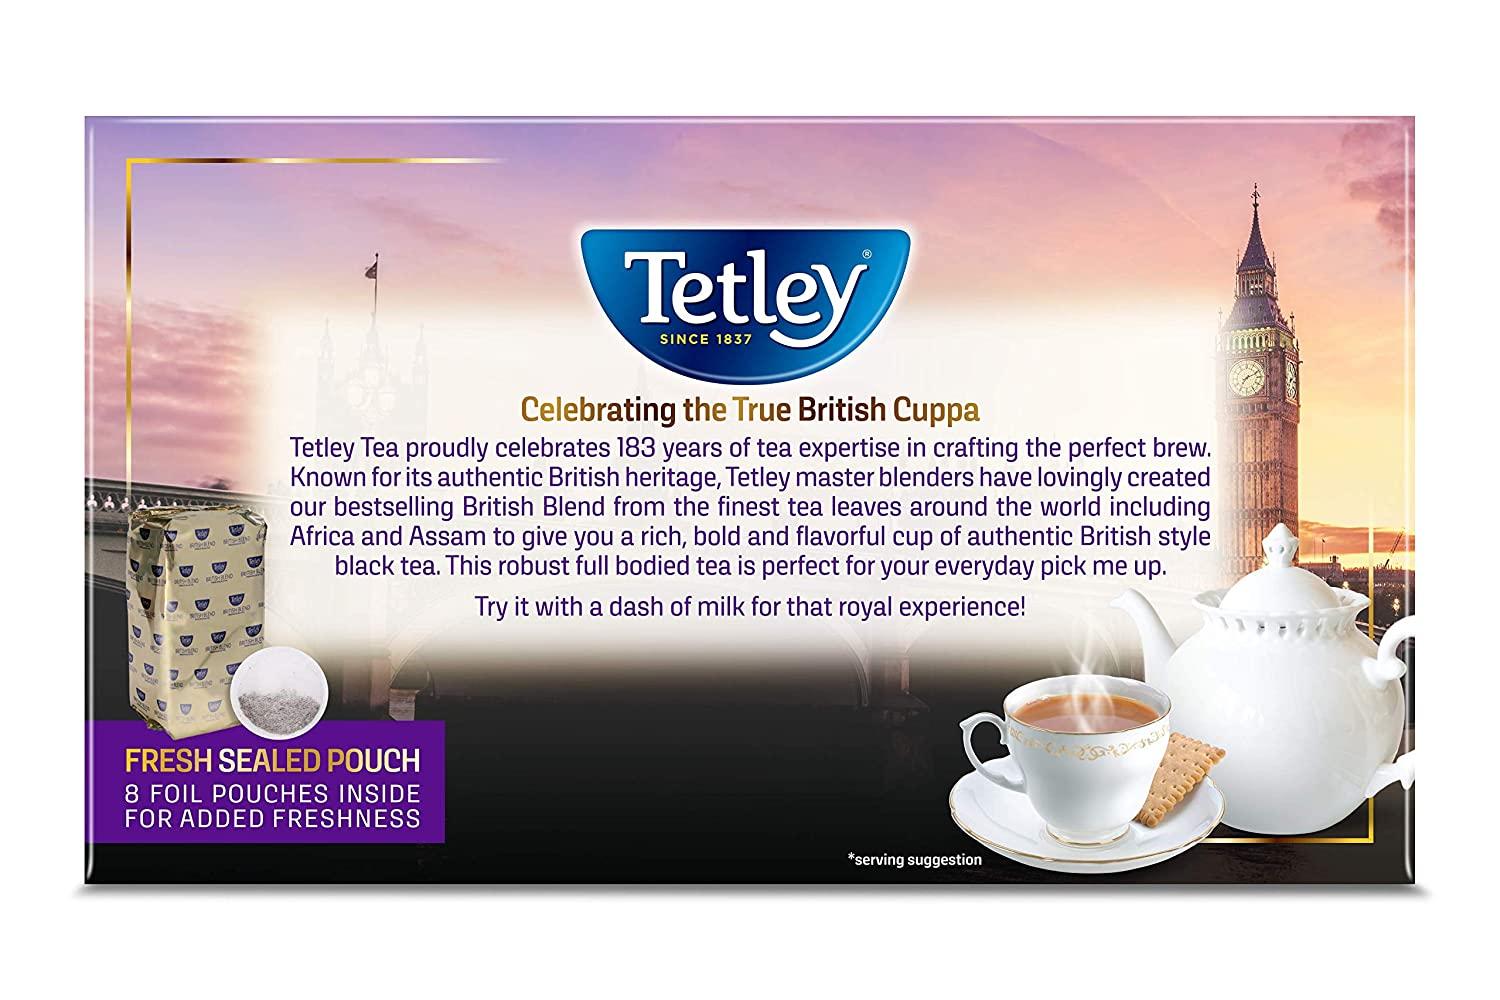 Tetley Black Tea